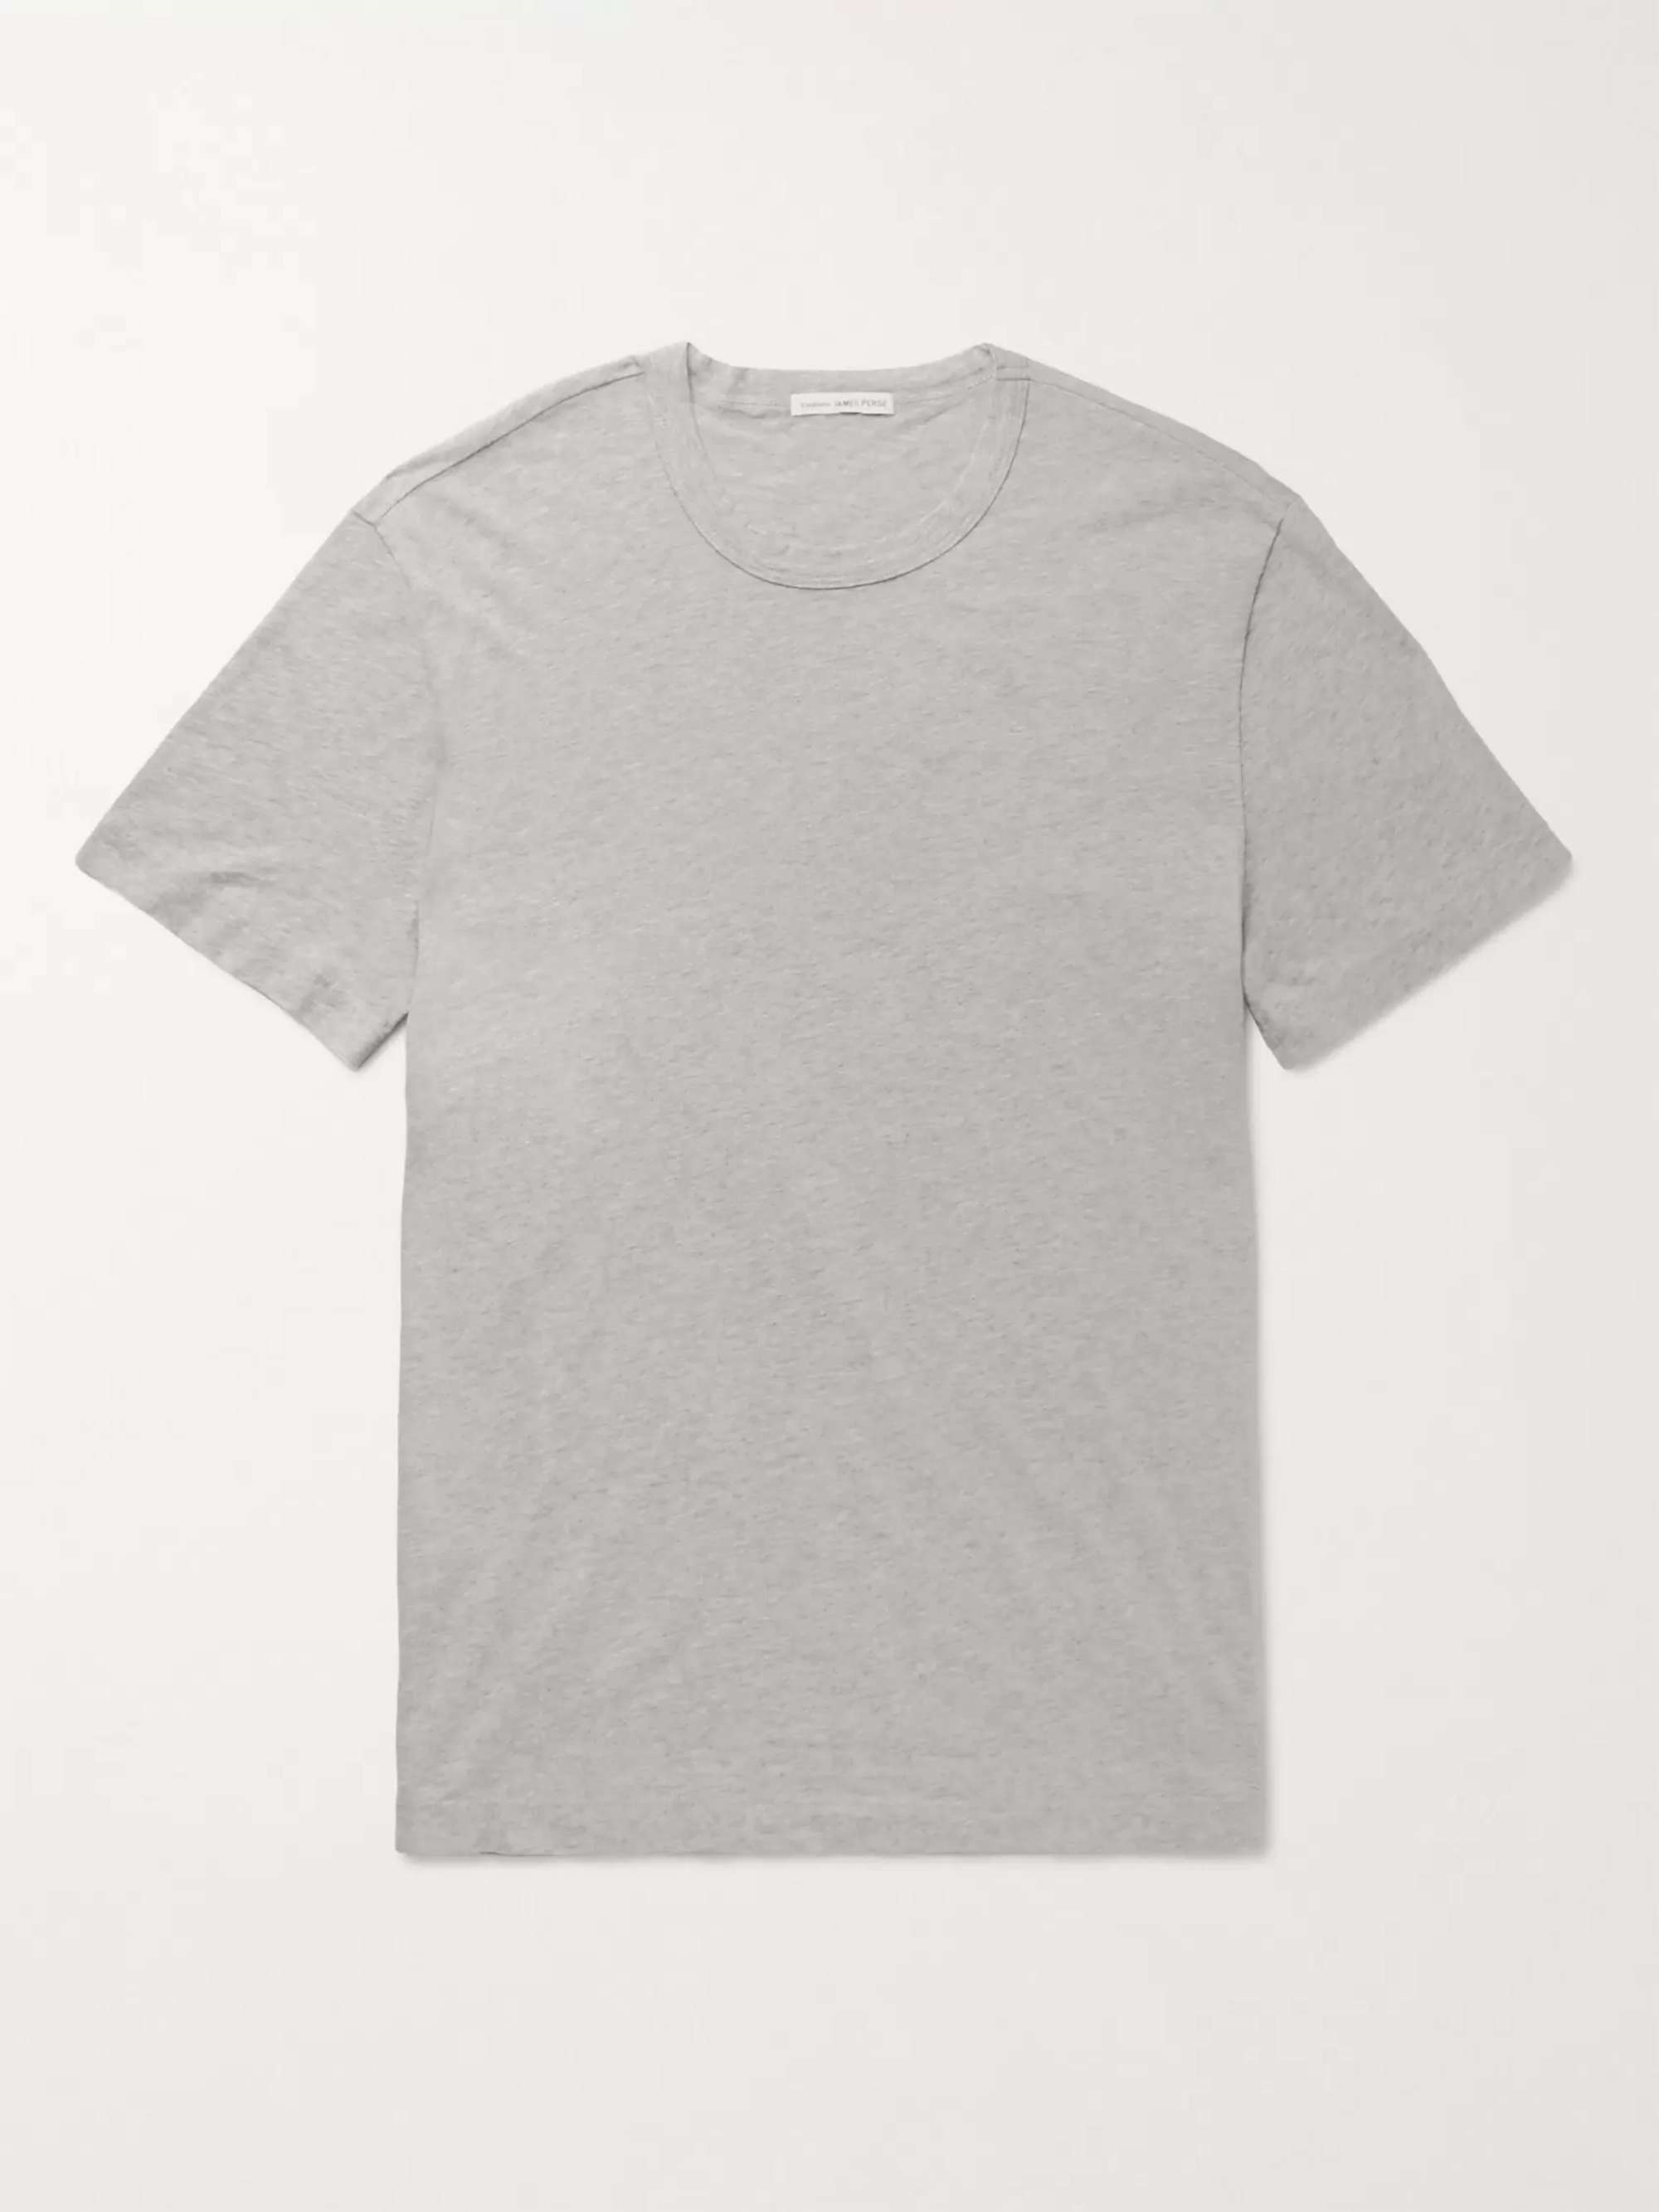 JAMES PERSE Slim-Fit Cotton-Jersey T-Shirt